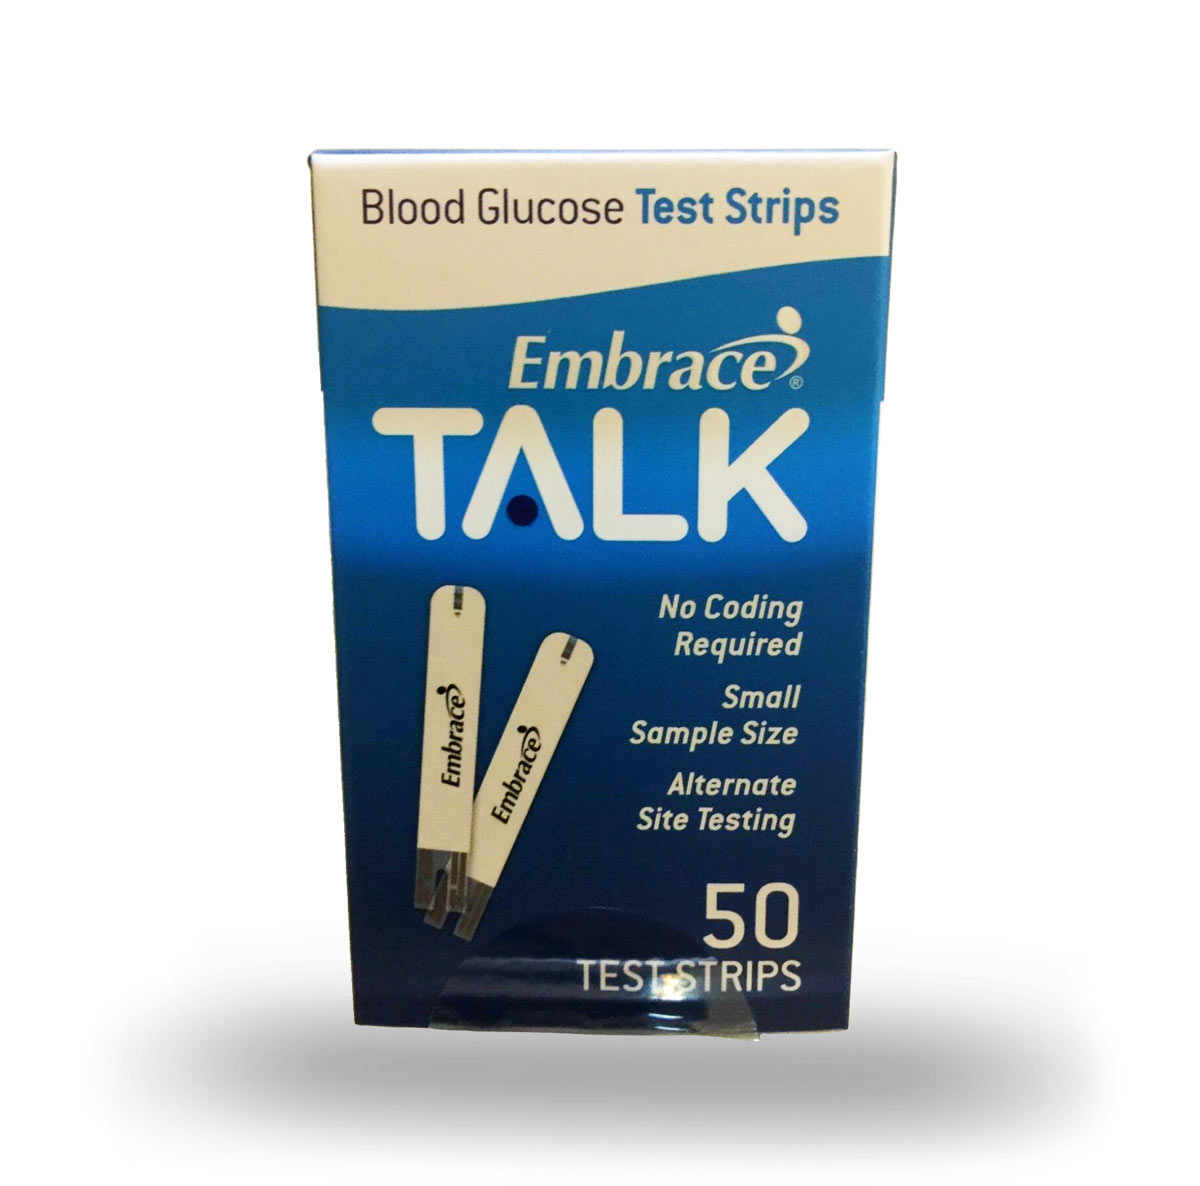 Embrace TALK Blood Glucose Test Strips 50 CT. Image 1.